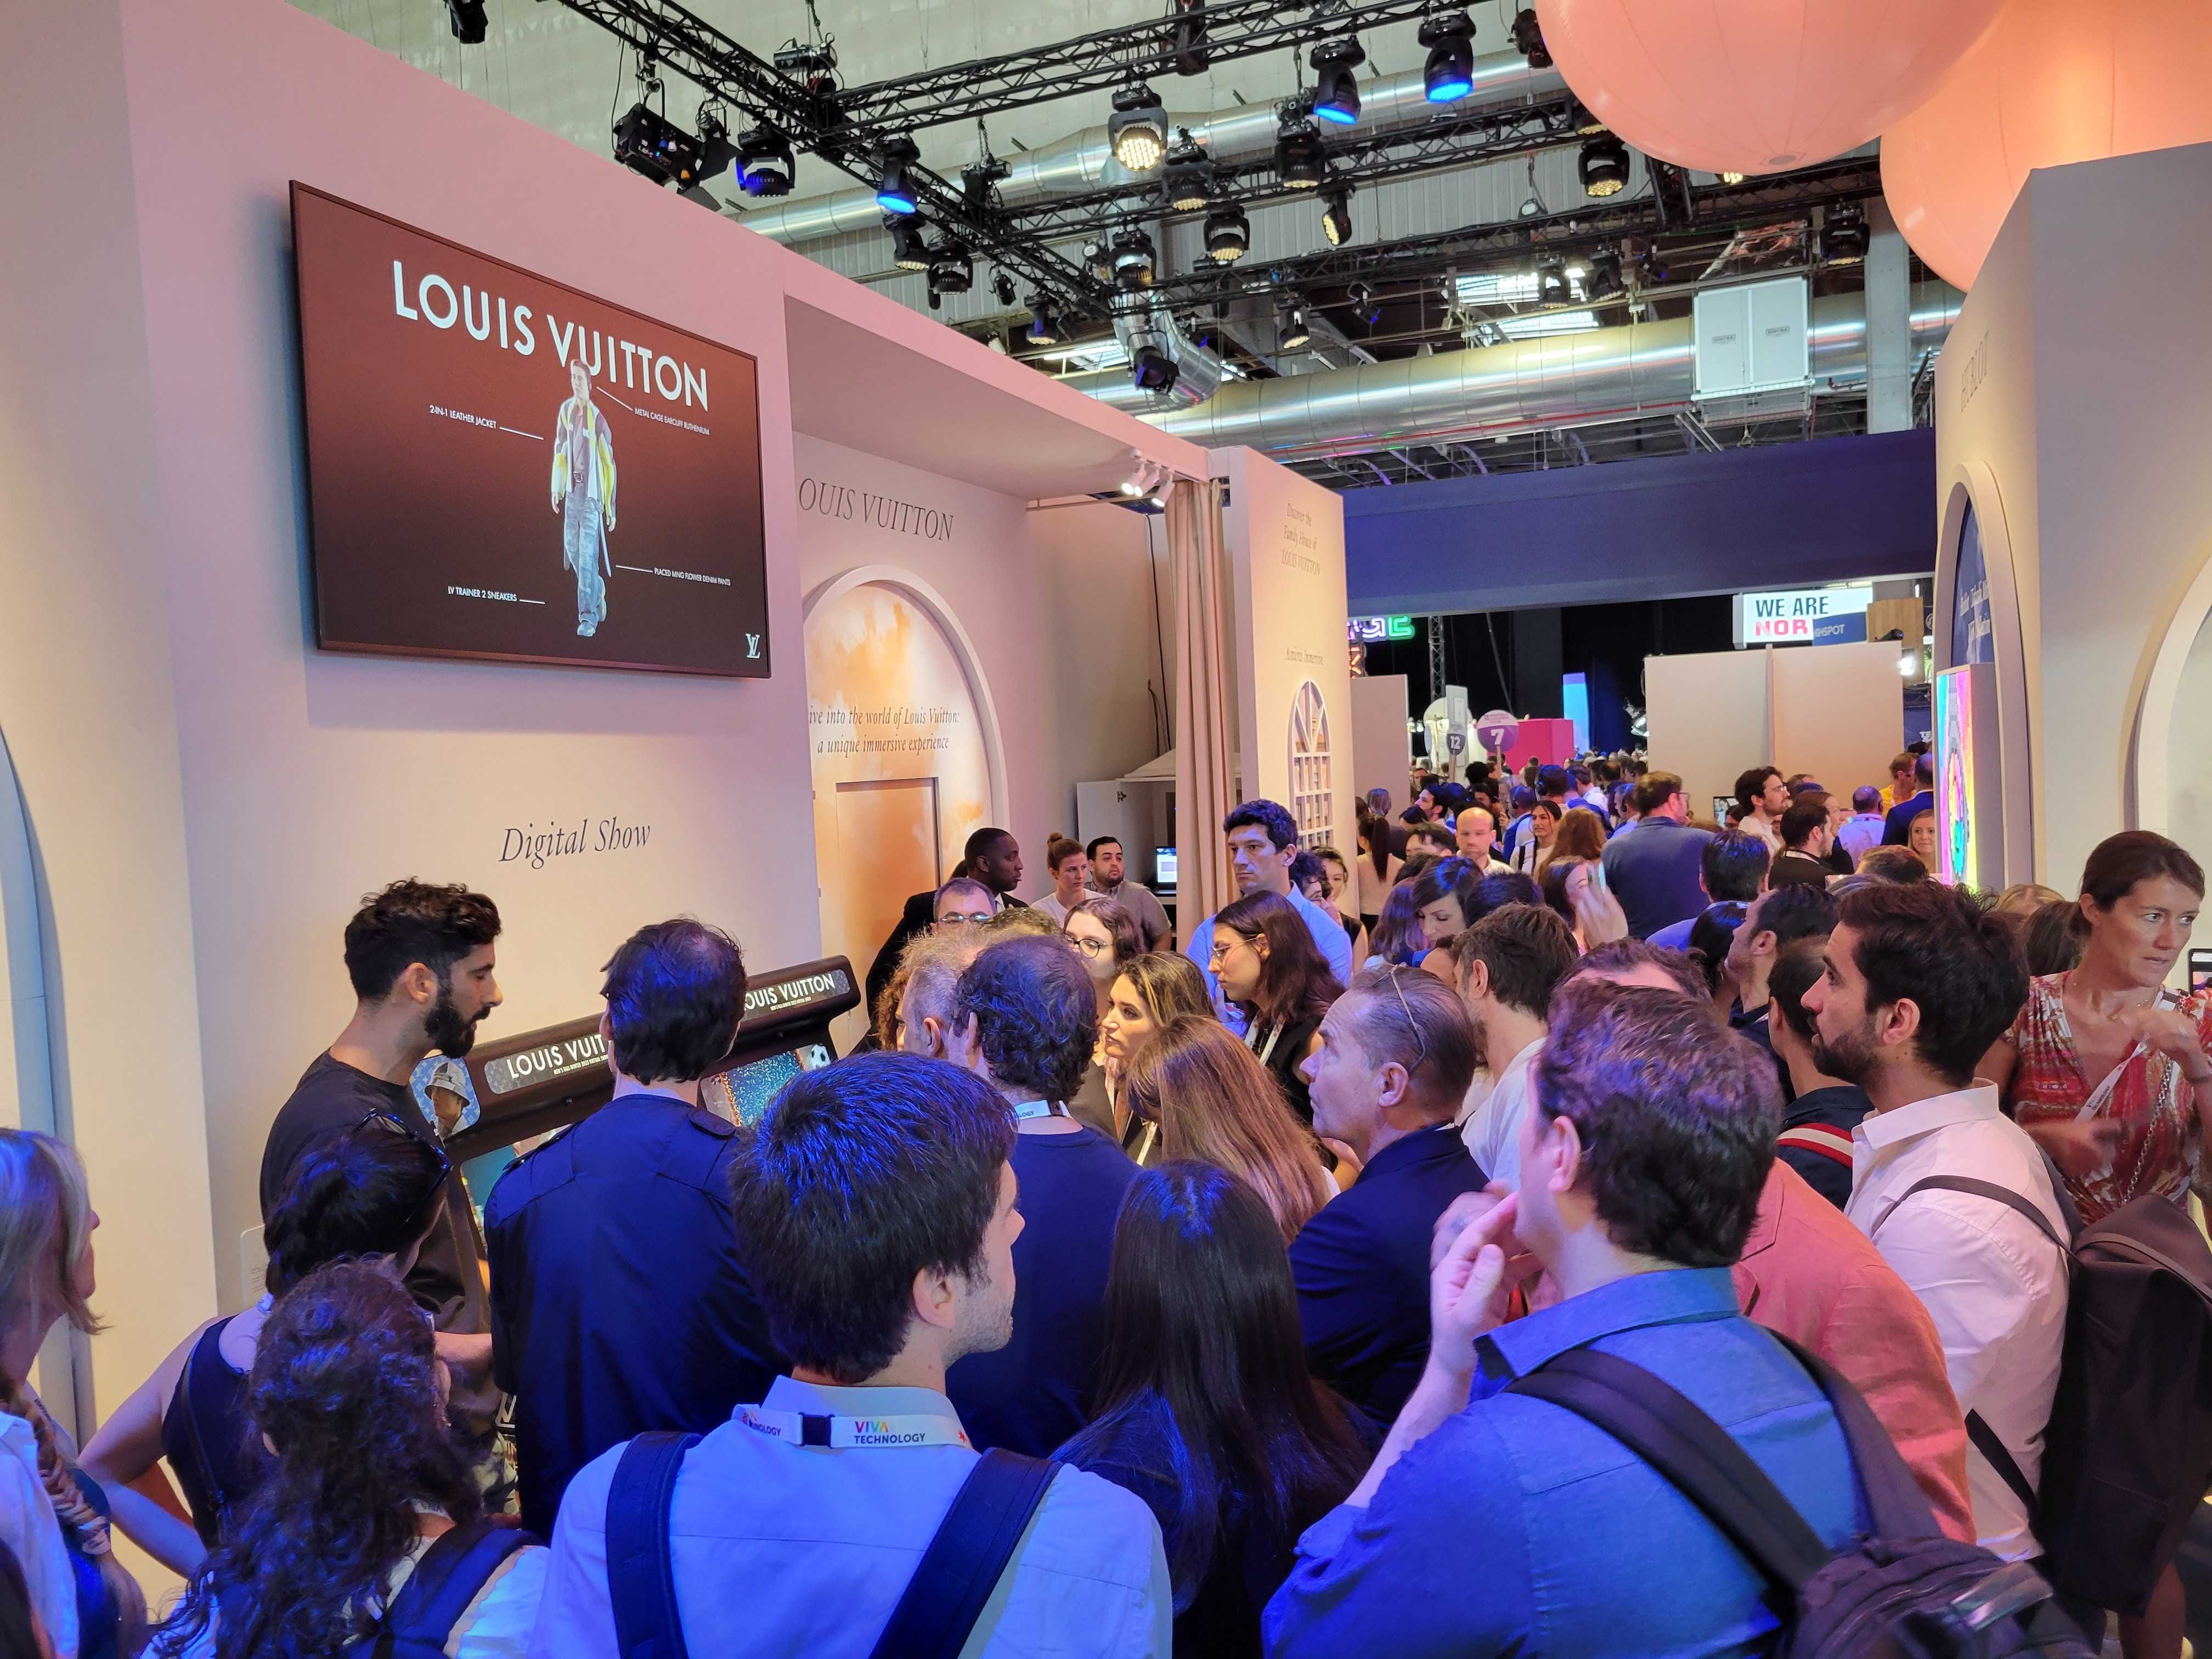 Louis Vuitton on X: #LouisVuitton at #VivaTech2022. In a virtual